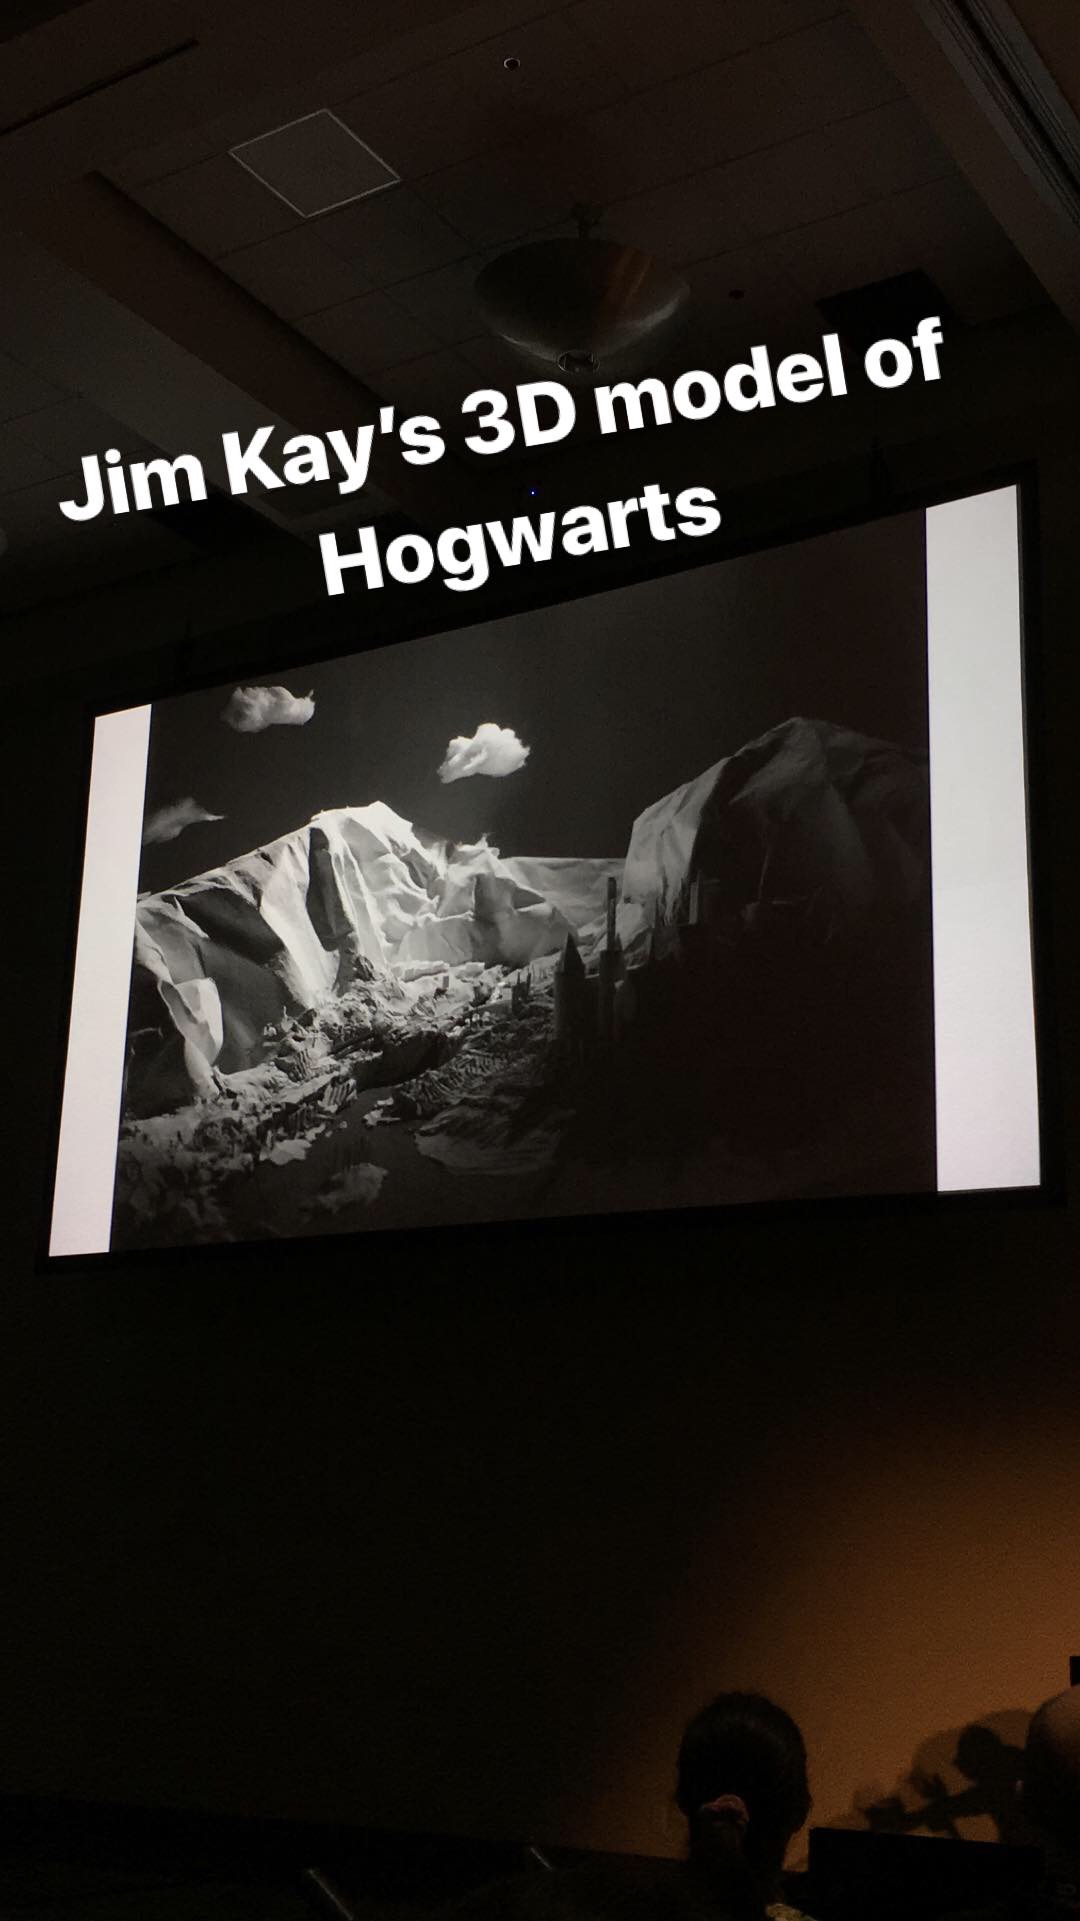 JIm Kay’s model of Hogwarts